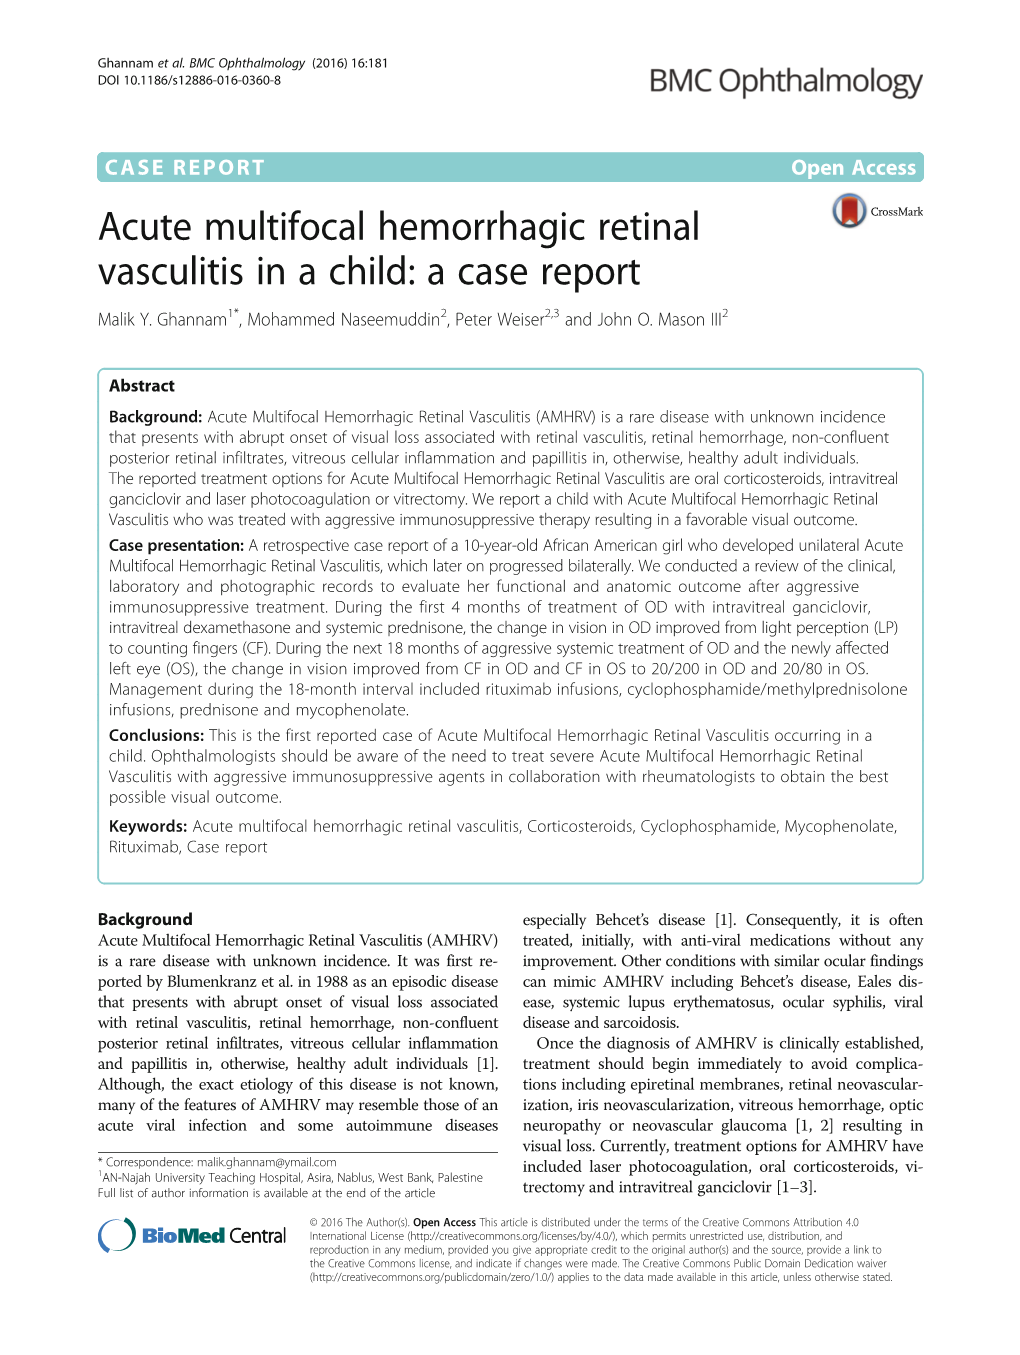 Acute Multifocal Hemorrhagic Retinal Vasculitis in a Child: a Case Report Malik Y